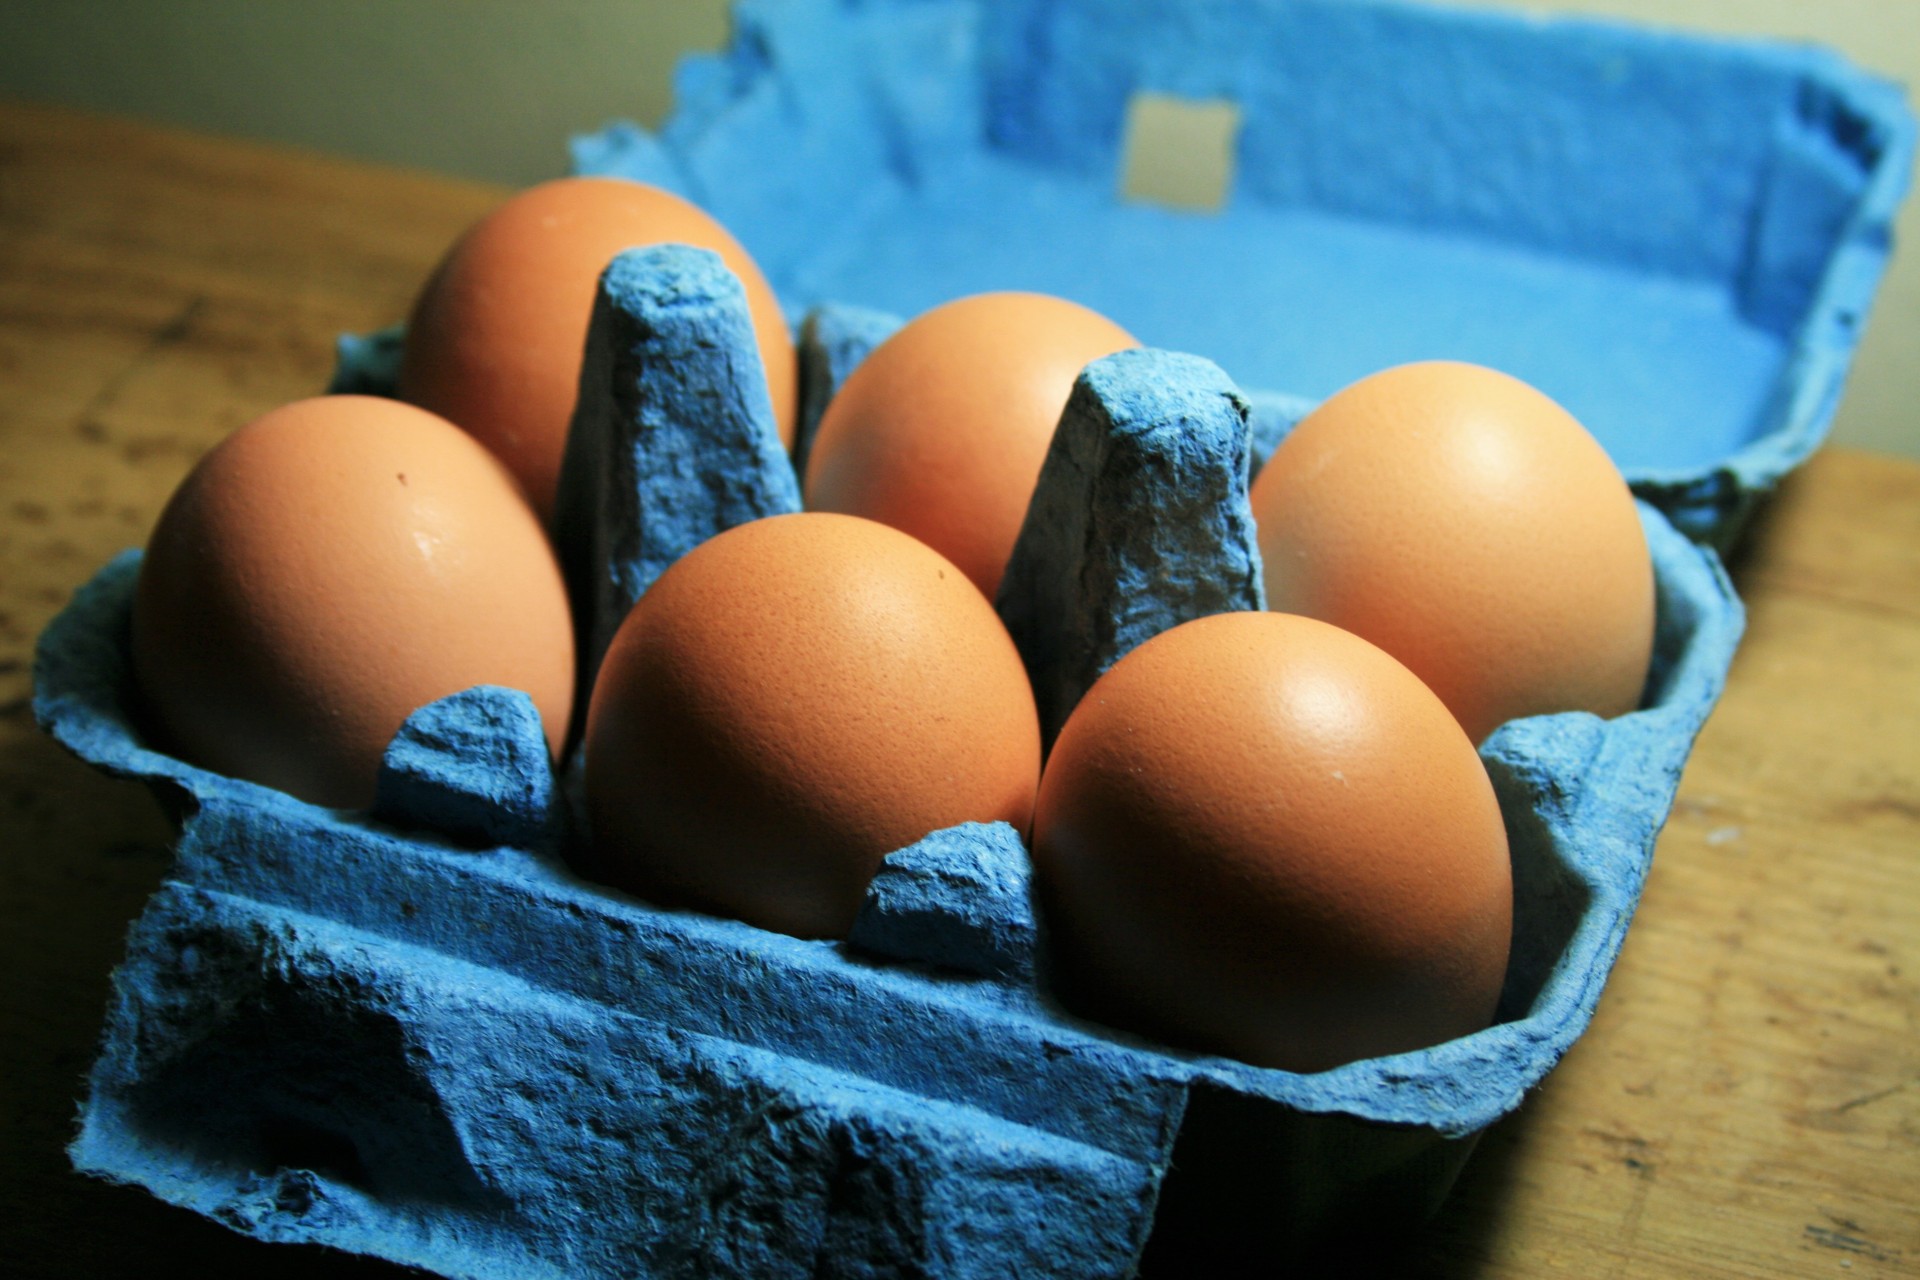 eggs six brown free photo